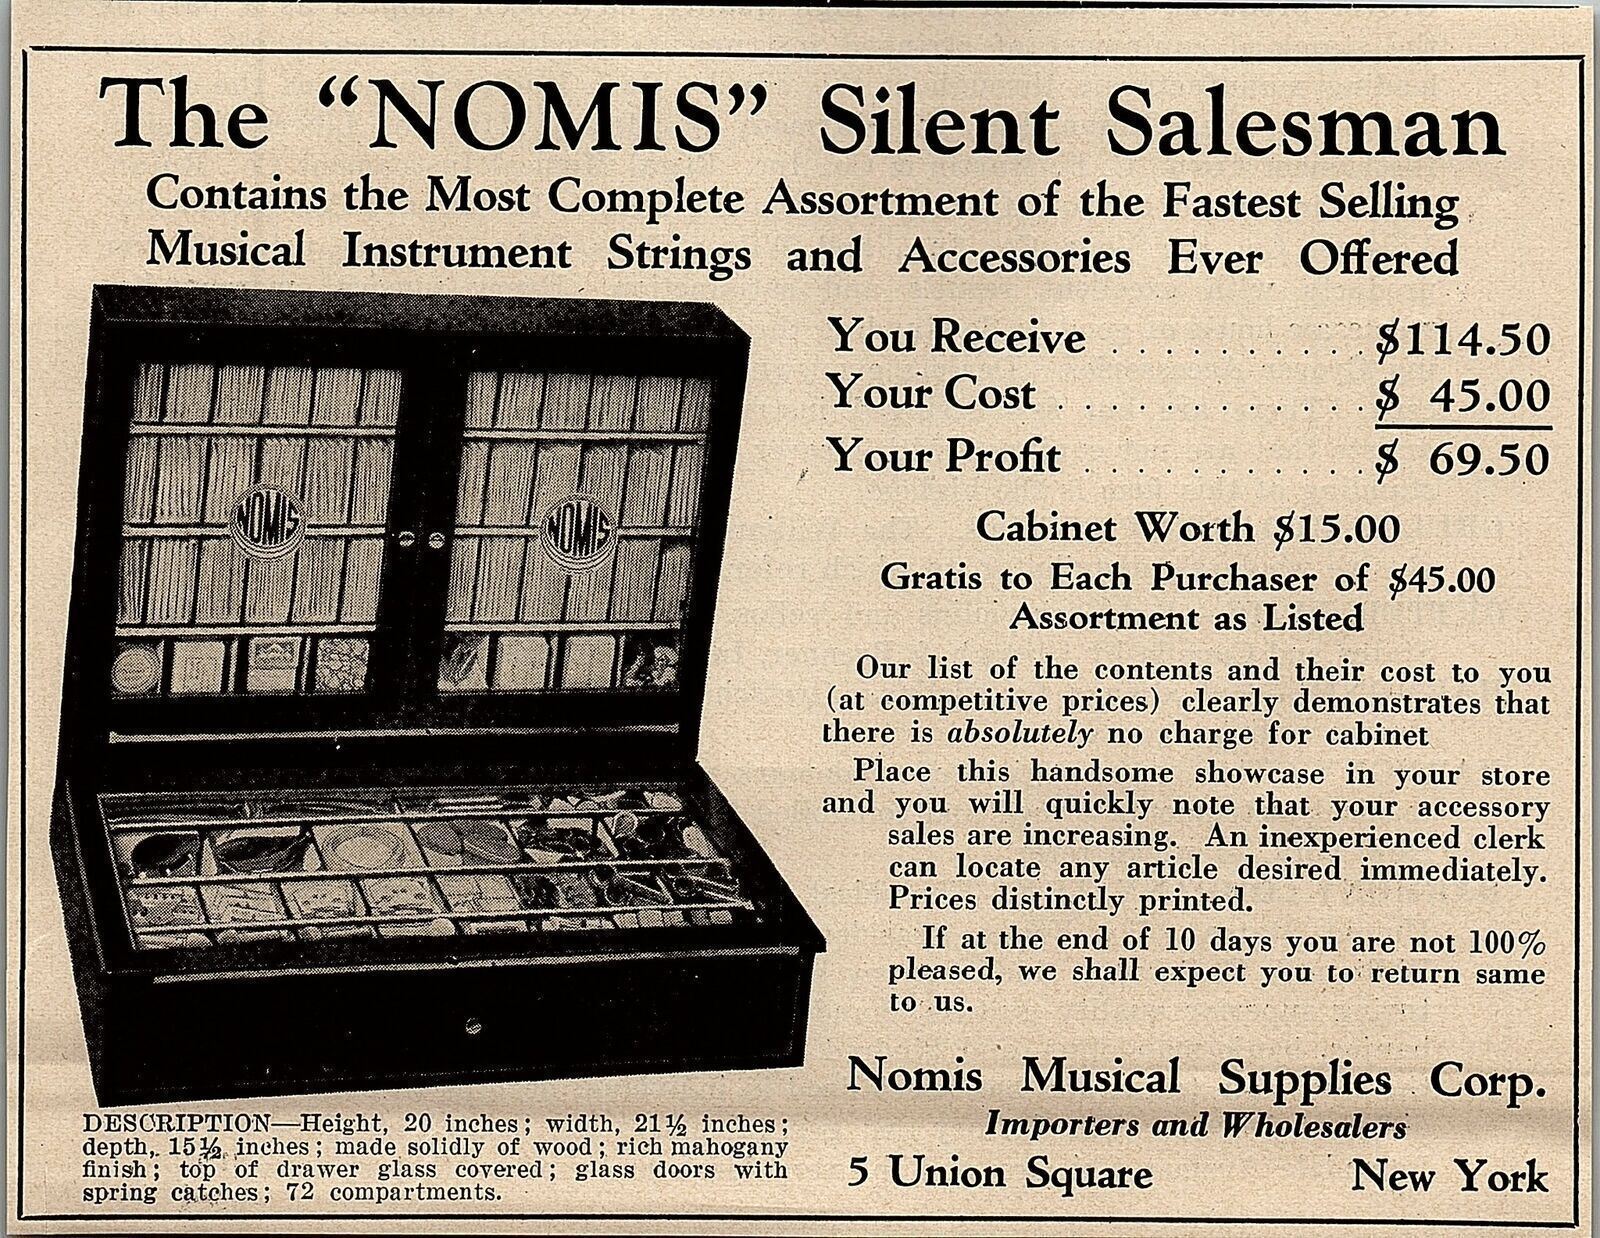 1927 THE NOMIS SILENT SALESMAN MUSICAL SUPPLIES CORP VINTAGE ADVERTISMENT 31-208